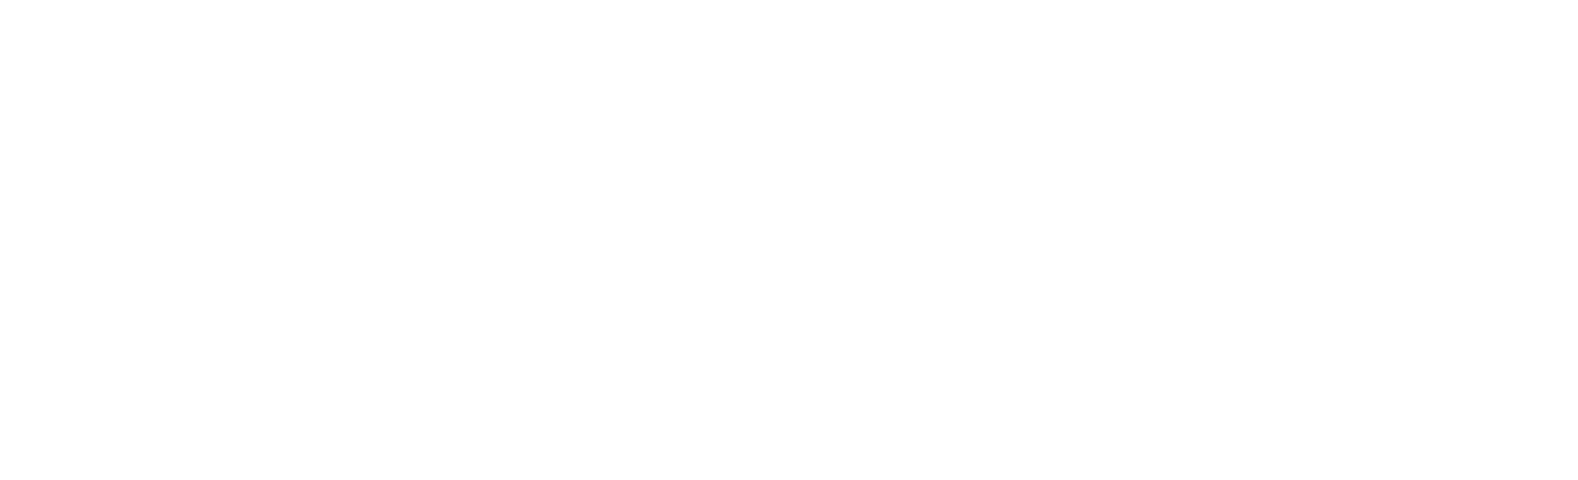 John Wood Group Logo groß für dunkle Hintergründe (transparentes PNG)